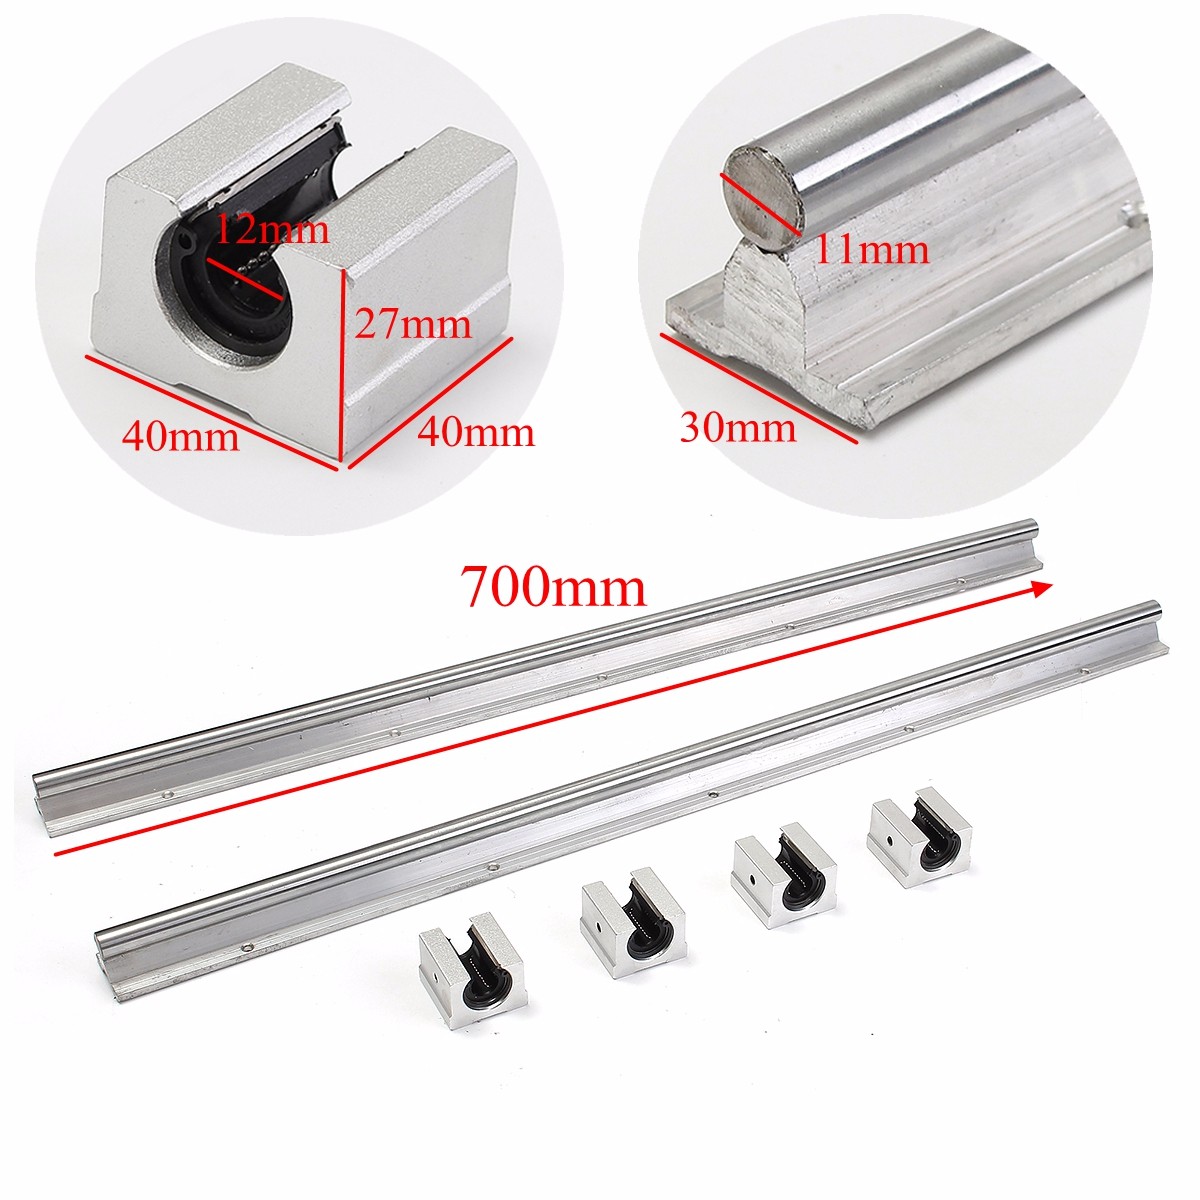 2Pcs SBR12-700mm Linear Bearing Slide Rails Linear Guide + 4Pcs SBR12UU Blocks For 3D Printer CNC 10